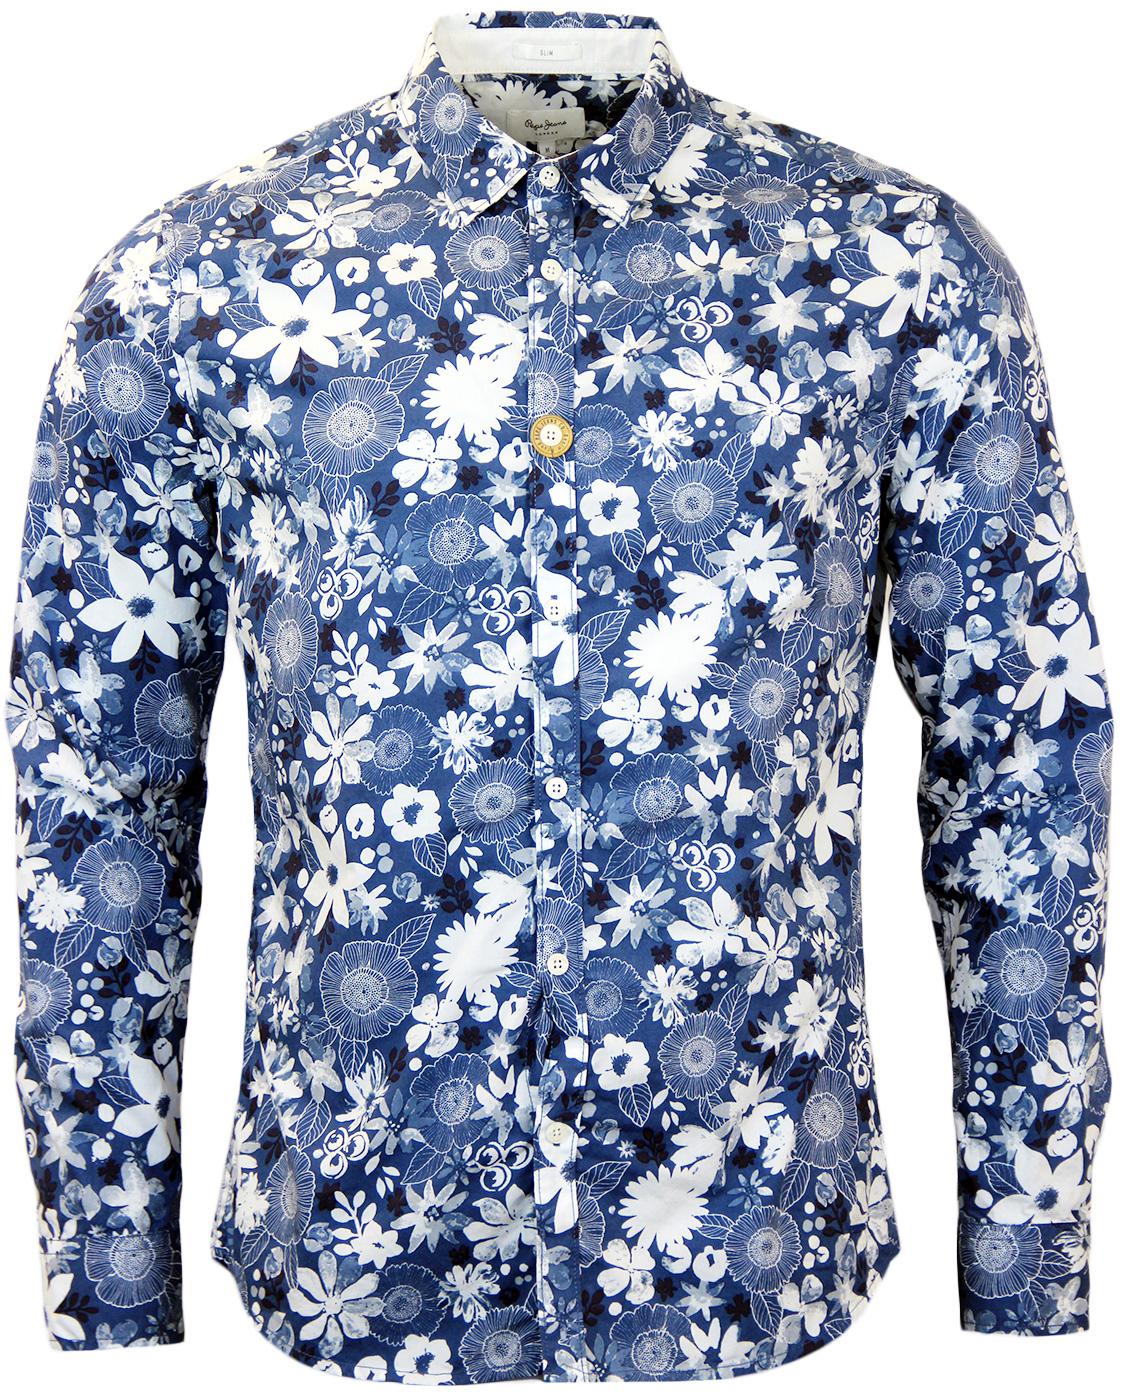 PEPE JEANS Pina Retro Mod Vibrant Floral Shirt in Dark Denim